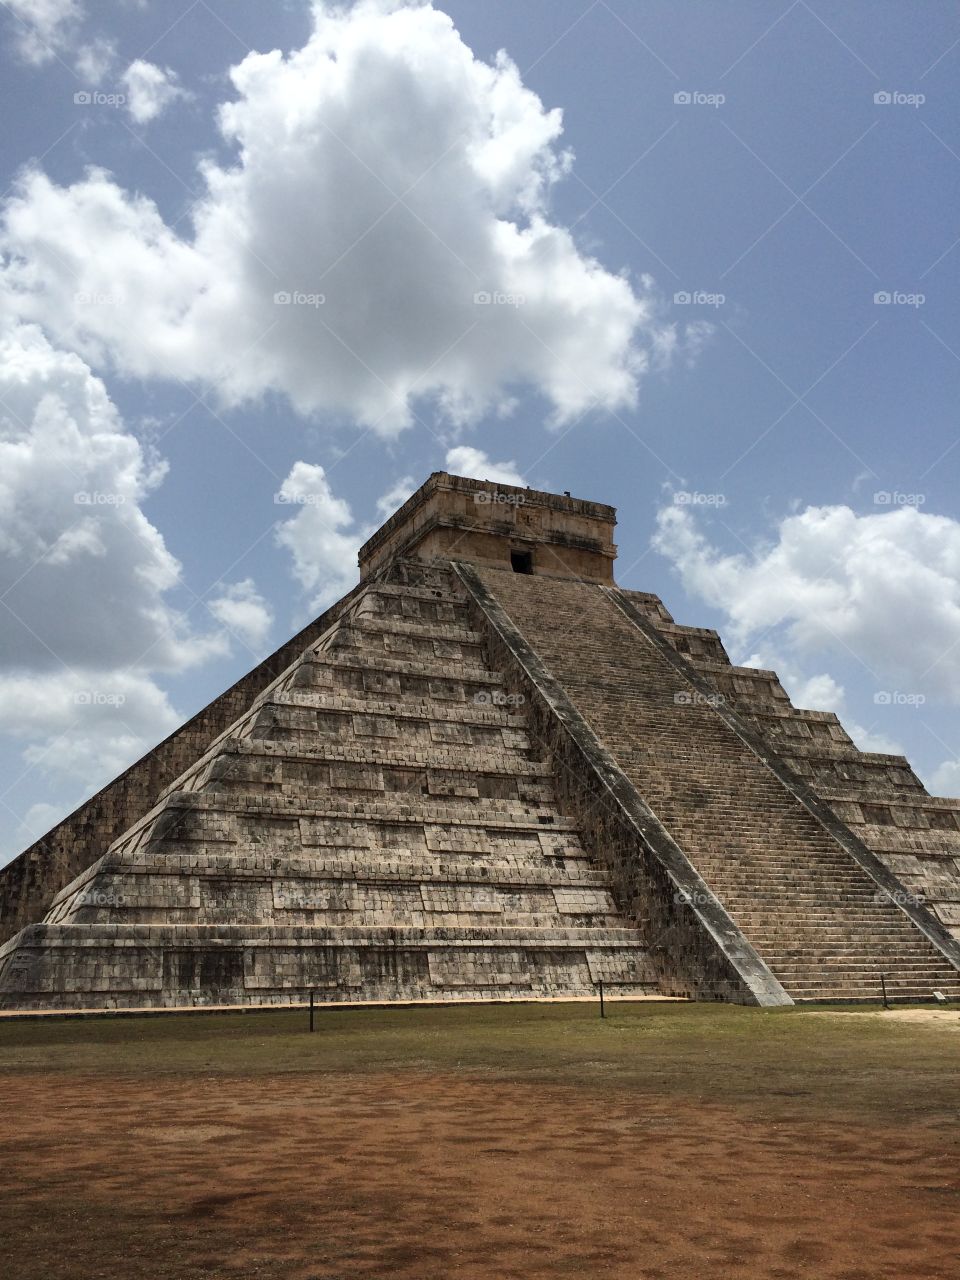 Chiza Itza. One of the seven wonders of the world...Mayan Pyramid.